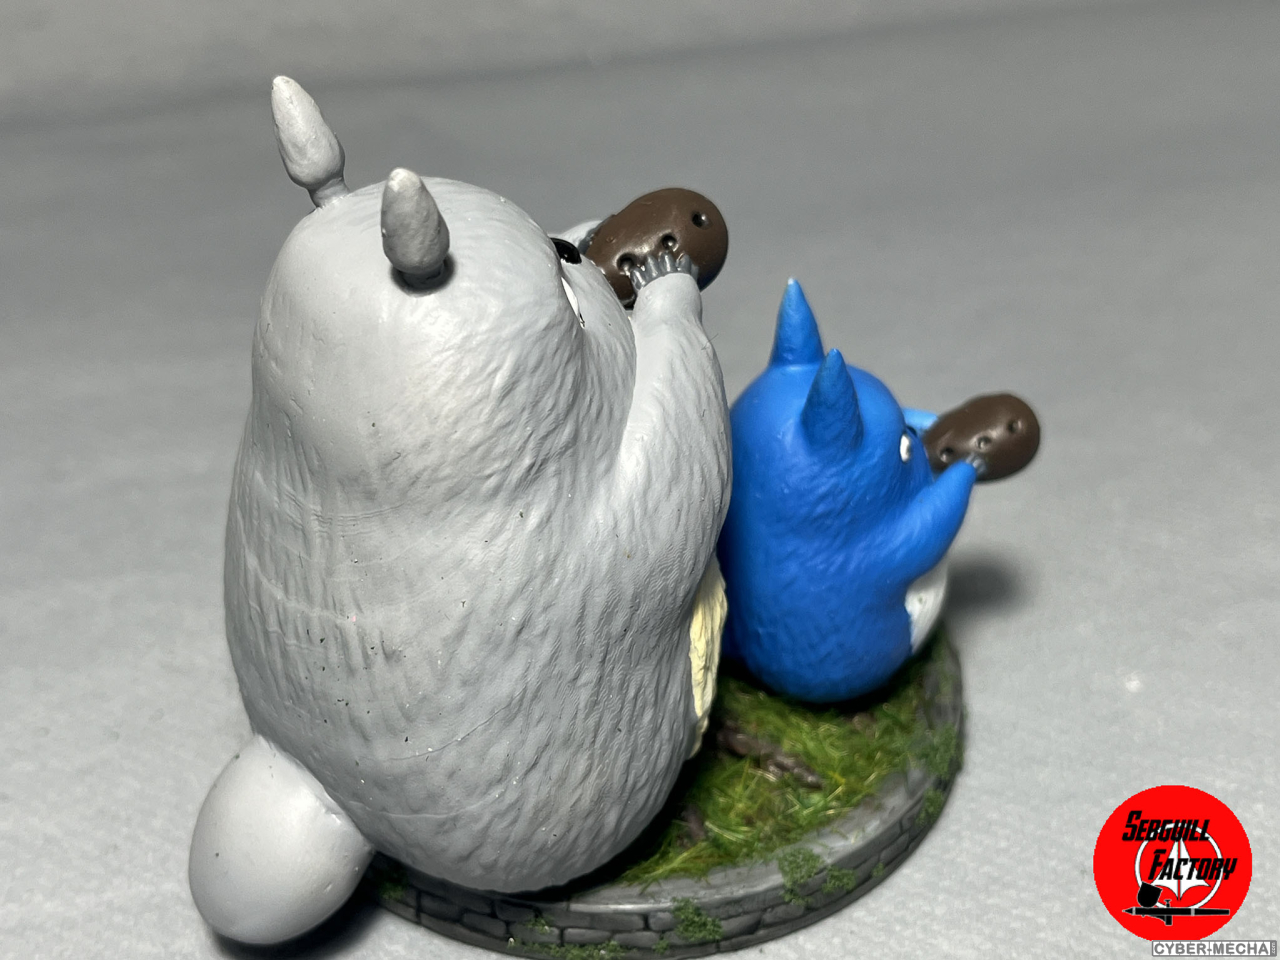 Print 3D : Totoro 1701076923